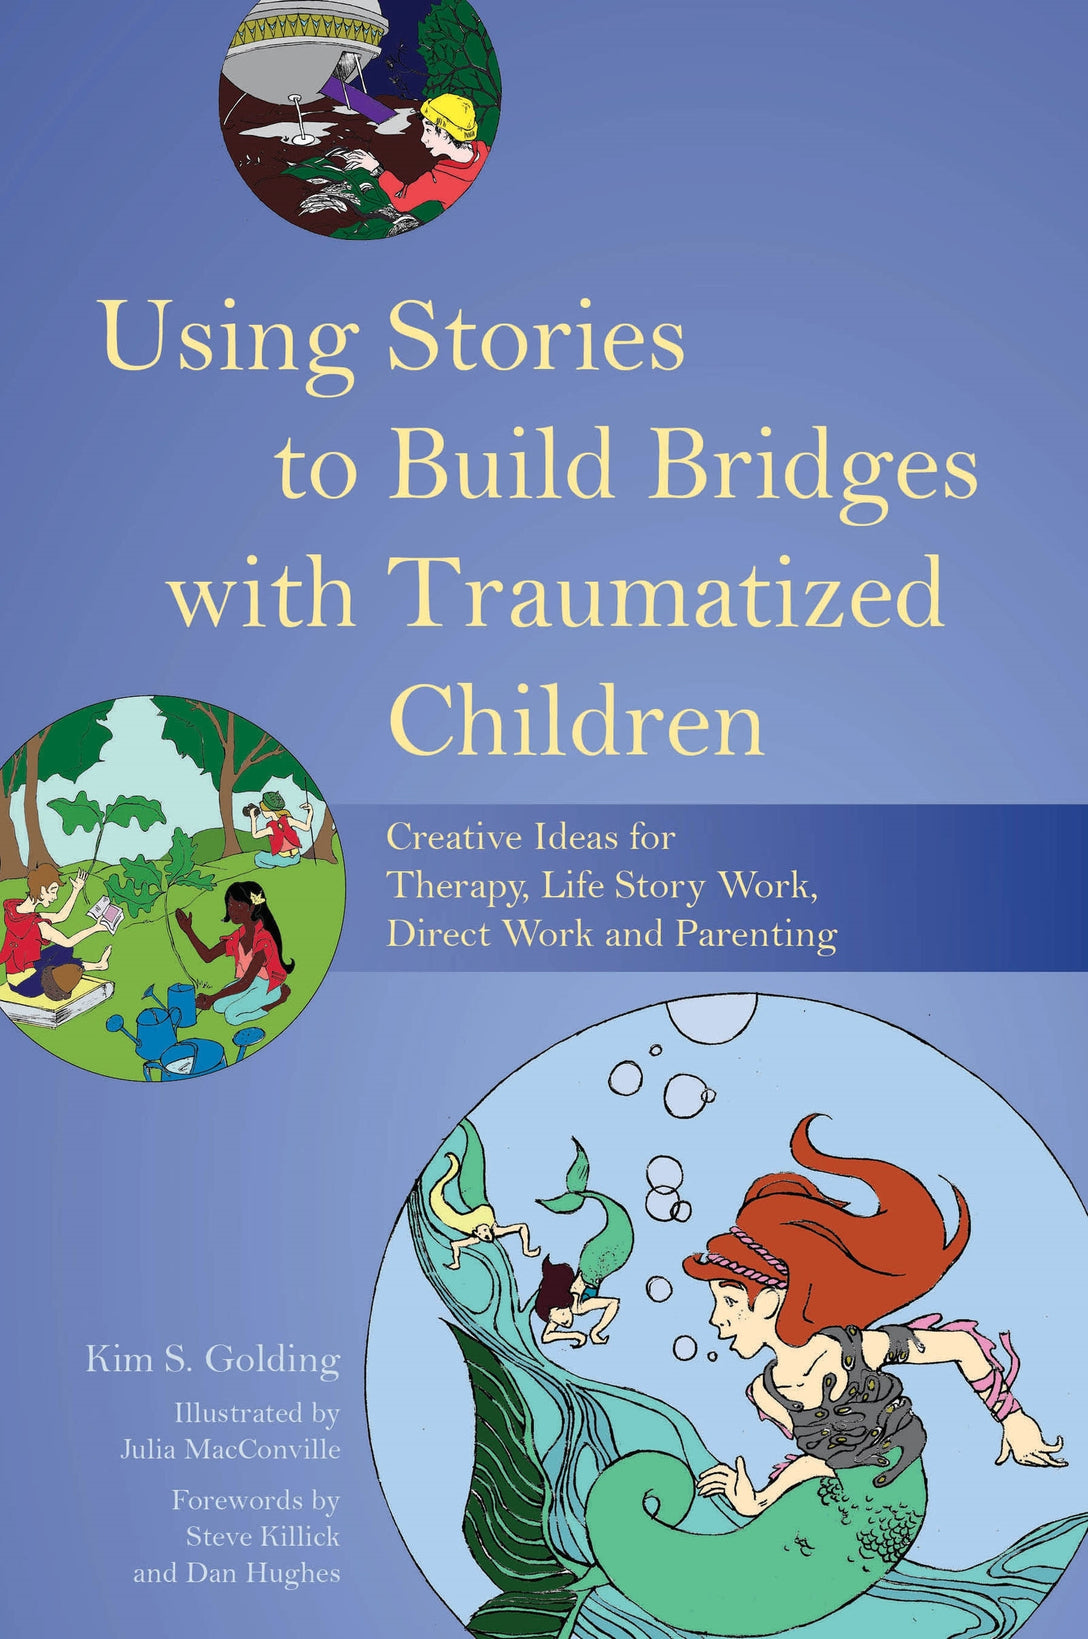 Using Stories to Build Bridges with Traumatized Children by Steve Killick, Julia McConville, Dan Hughes, Kim S. Golding